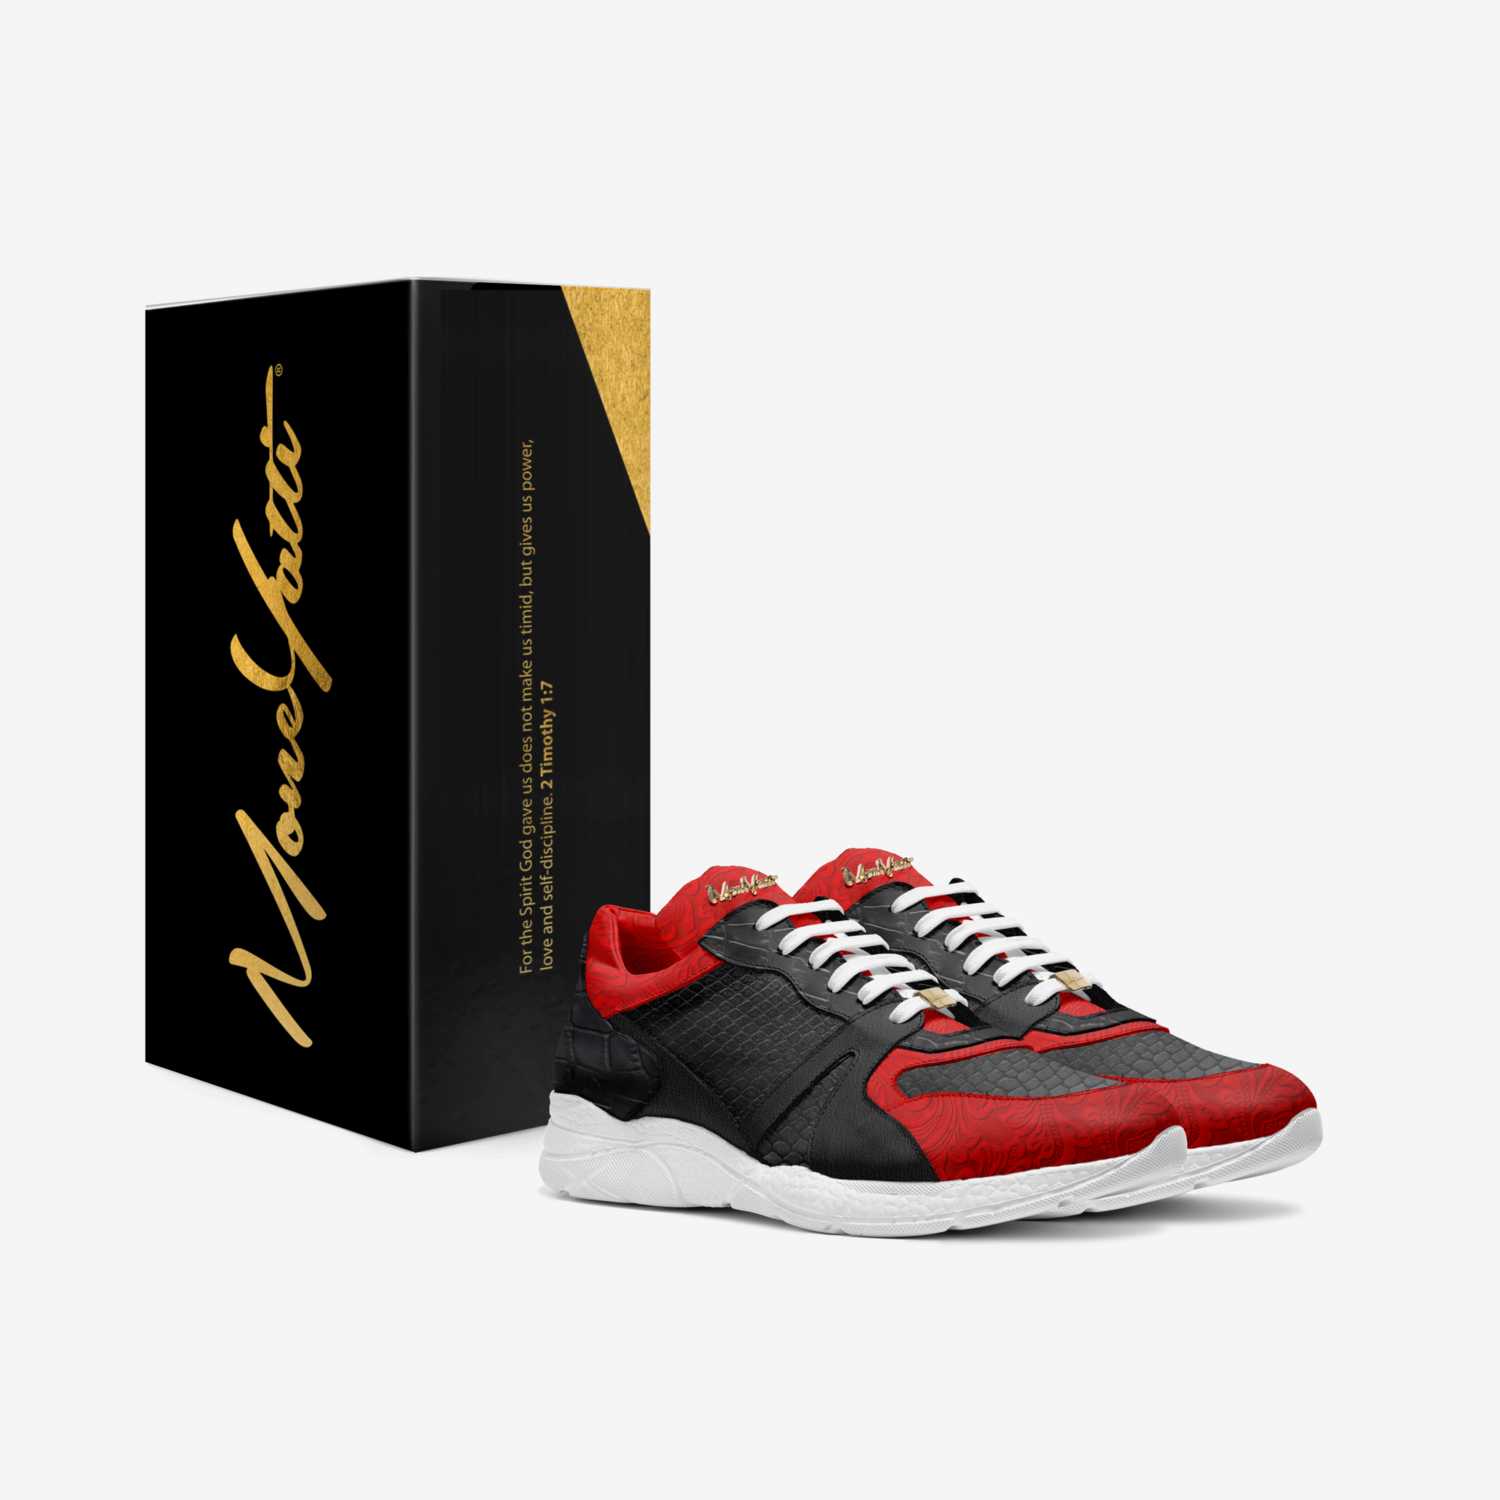 Moneyatti MP12 custom made in Italy shoes by Moneyatti Brand | Box view